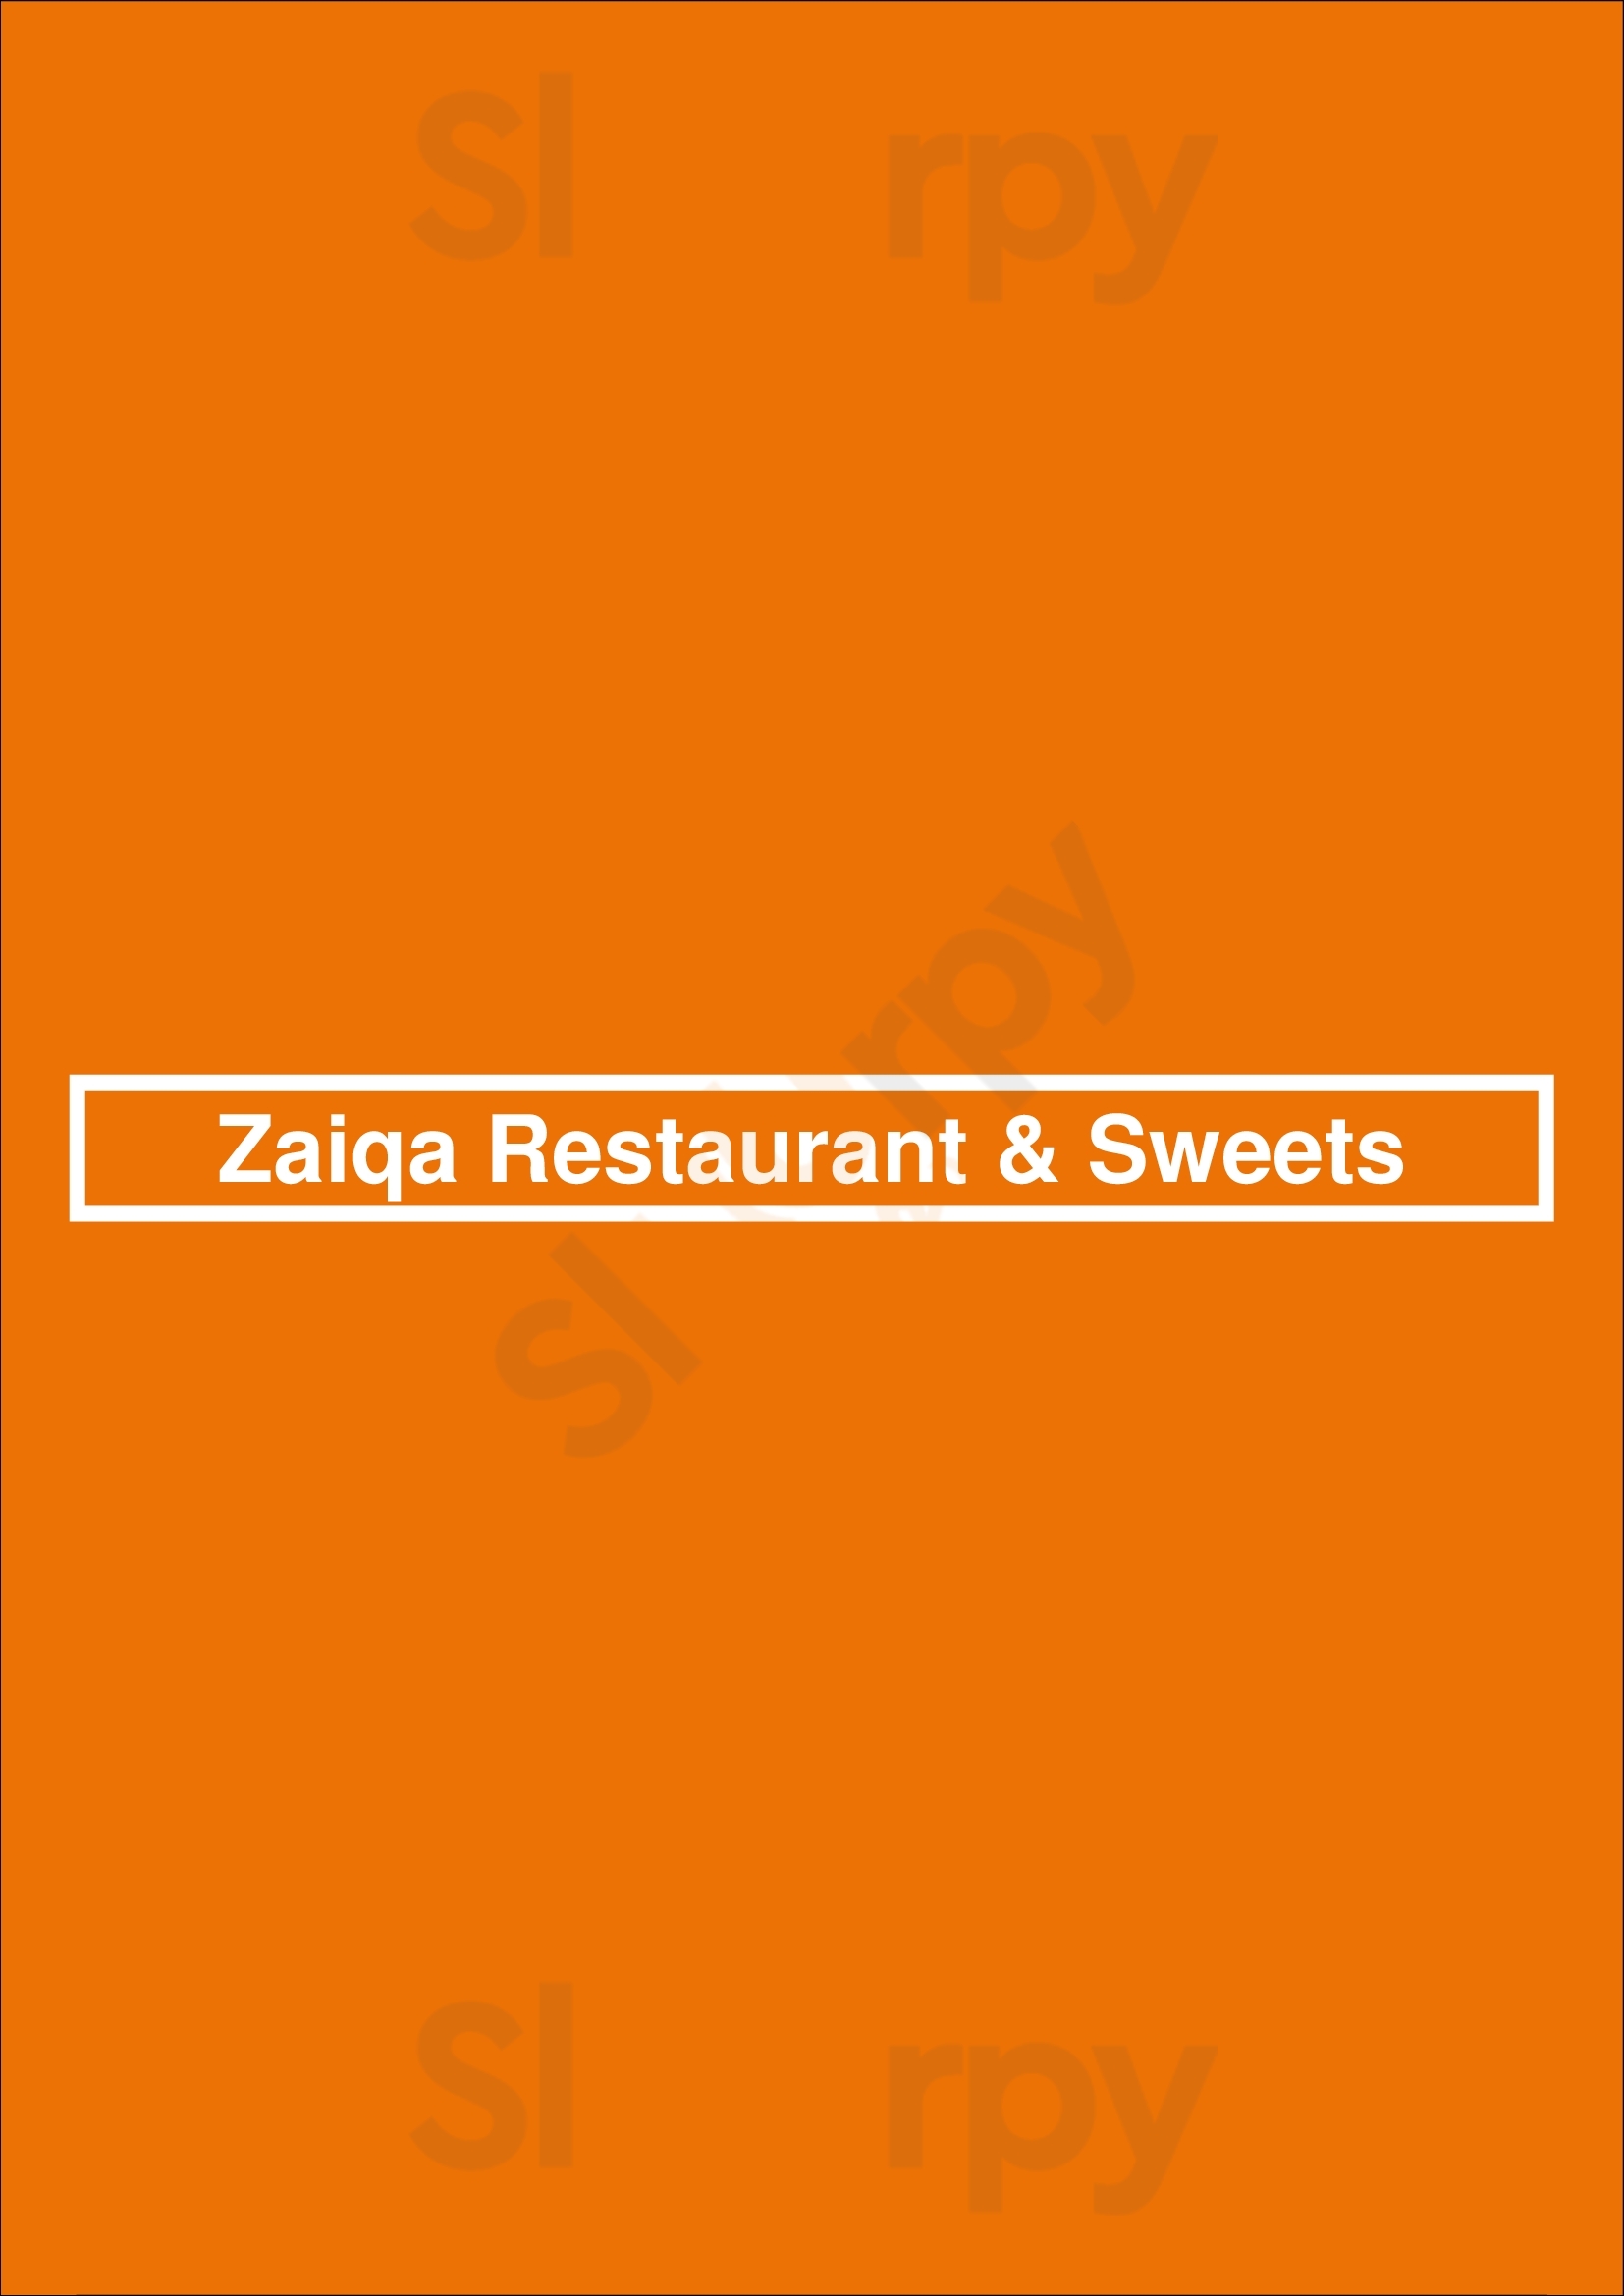 Zaiqa Restaurant & Sweets Toronto Menu - 1